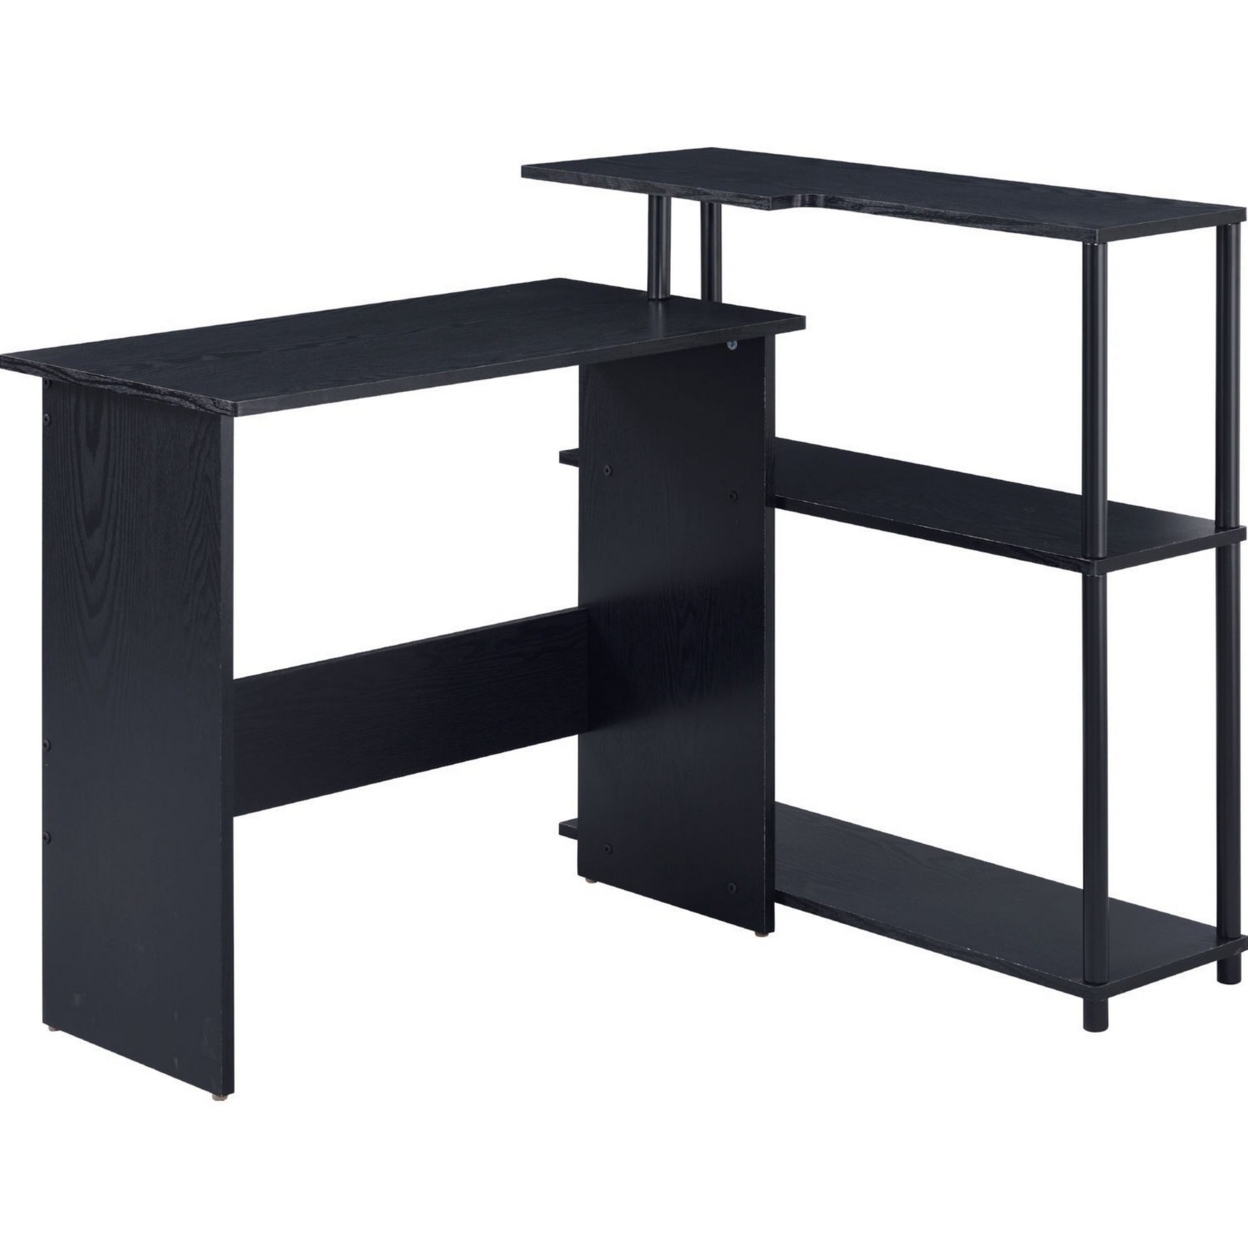 Writing Desk With L Shaped Design And 3 Tier Wooden Shelves, Black- Saltoro Sherpi